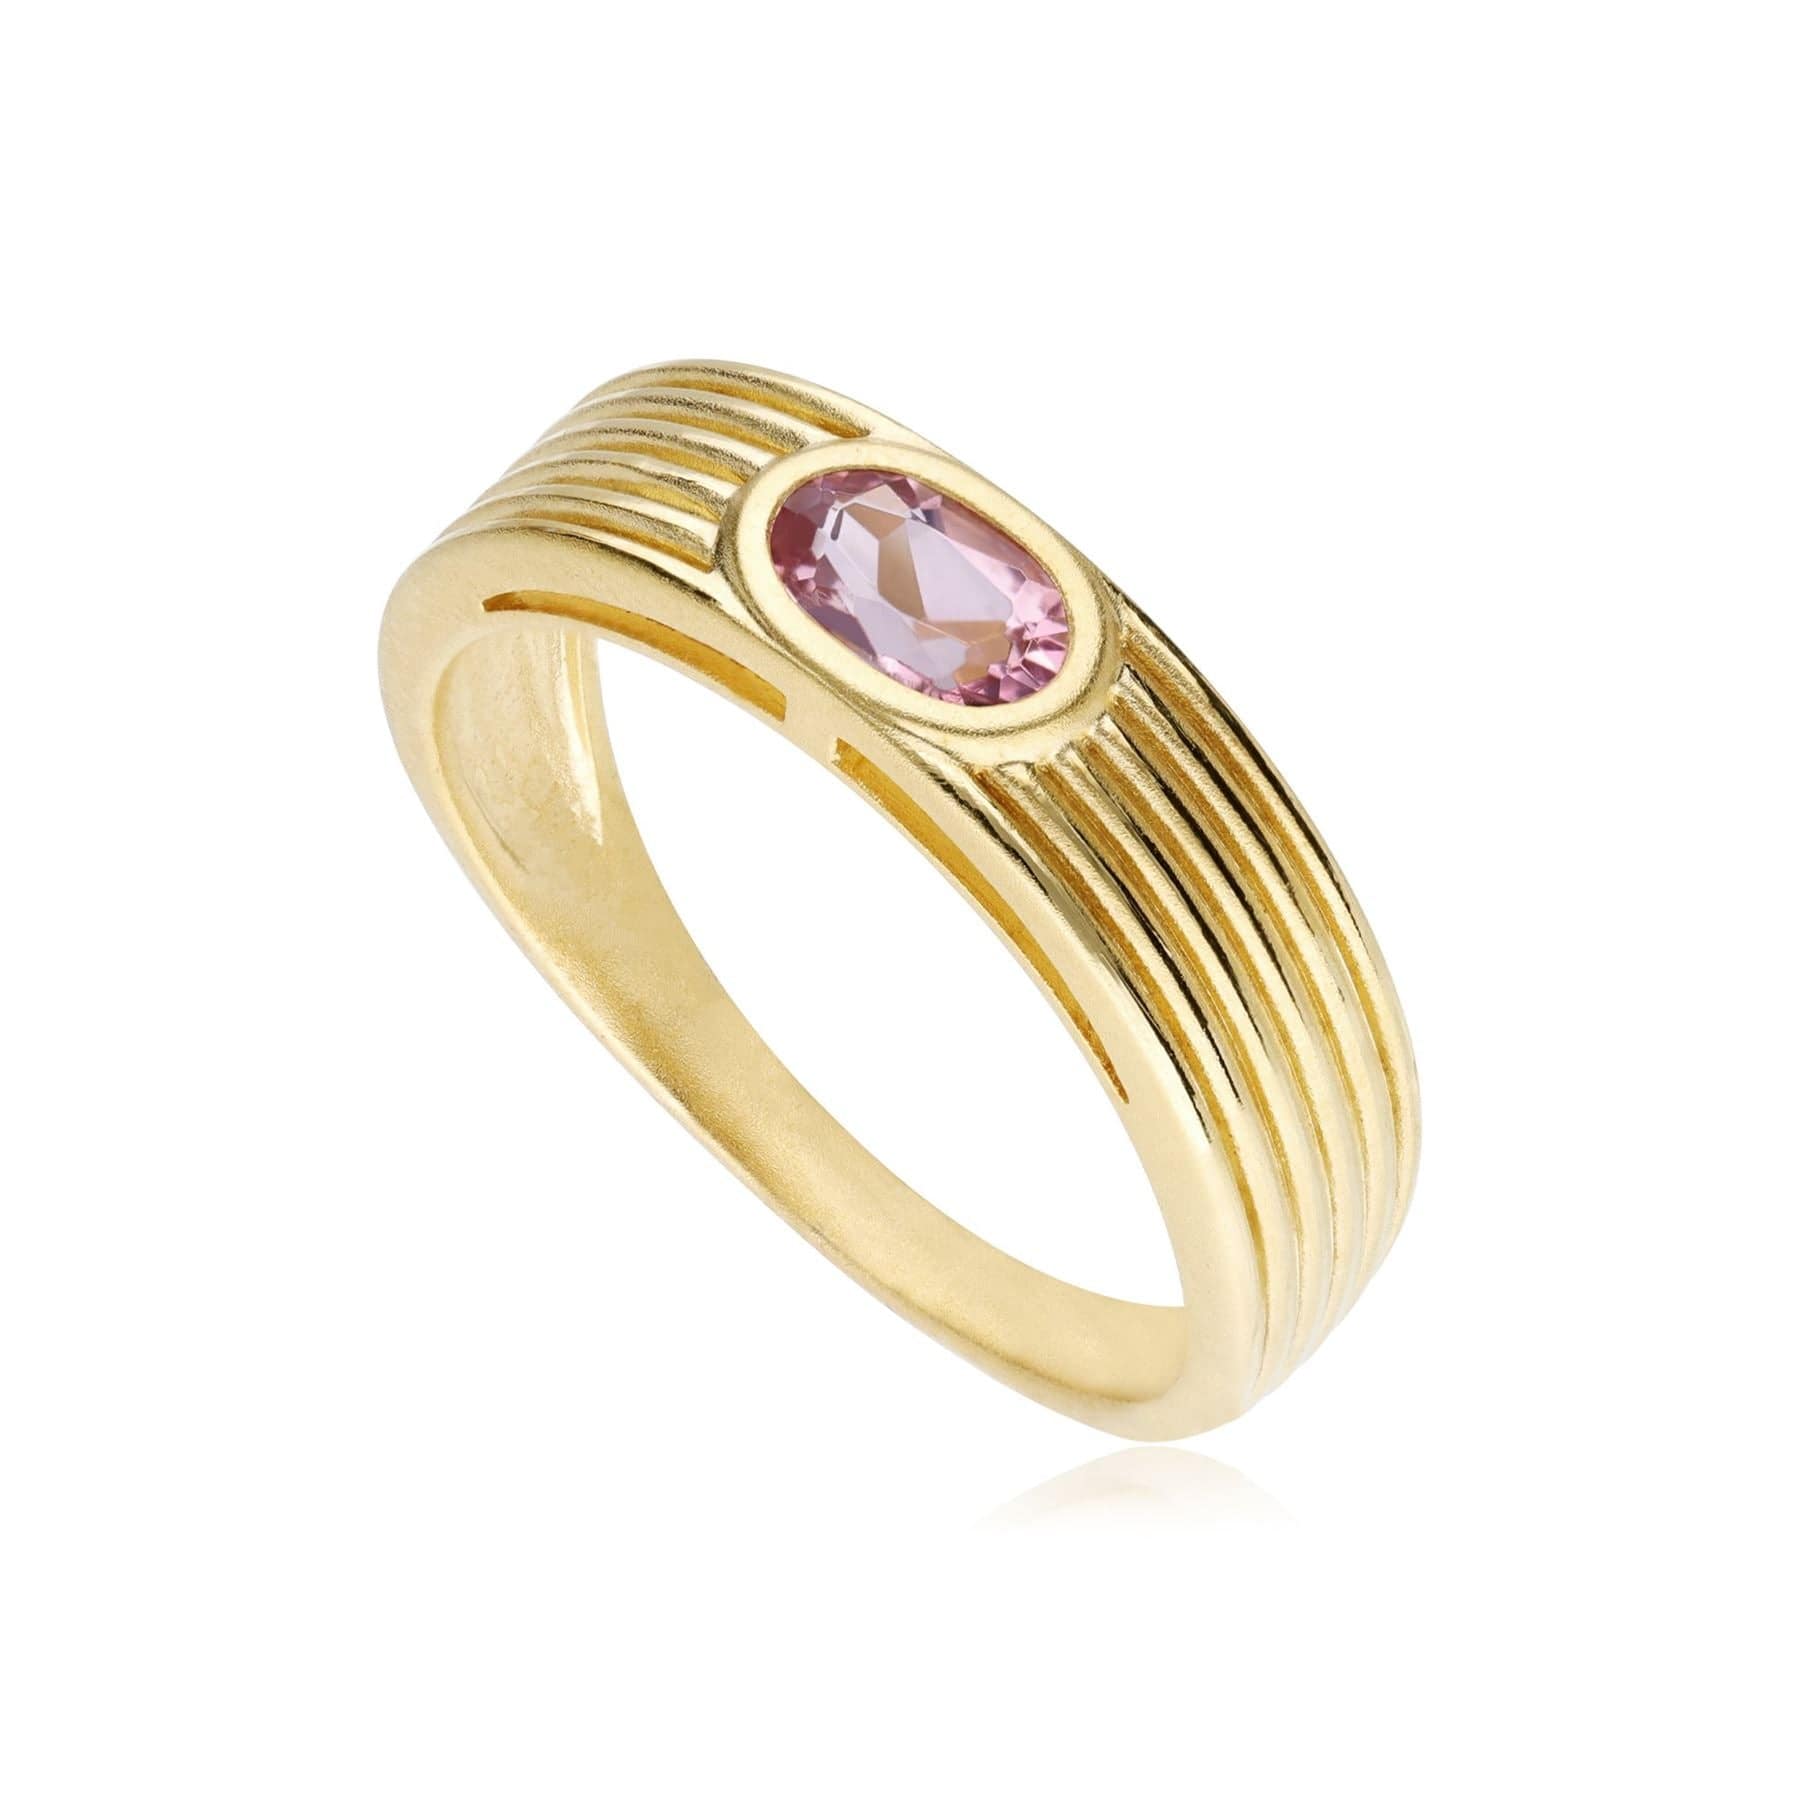 Caruso Pink Tourmaline Ring In 9ct Yellow Gold - Gemondo